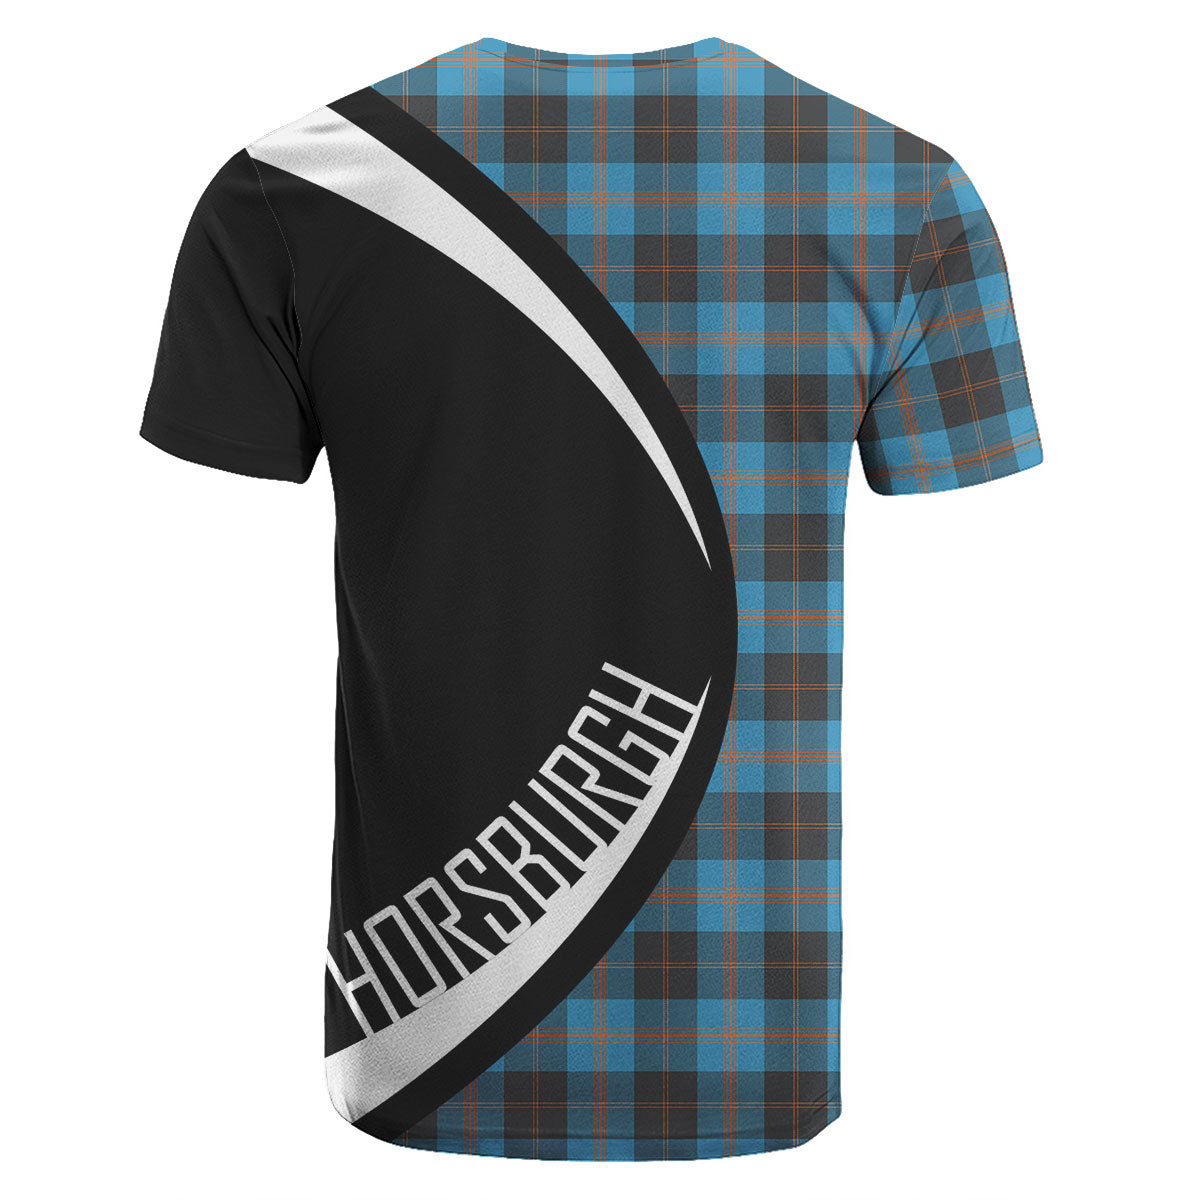 Horsburgh Tartan Crest T-shirt - Circle Style